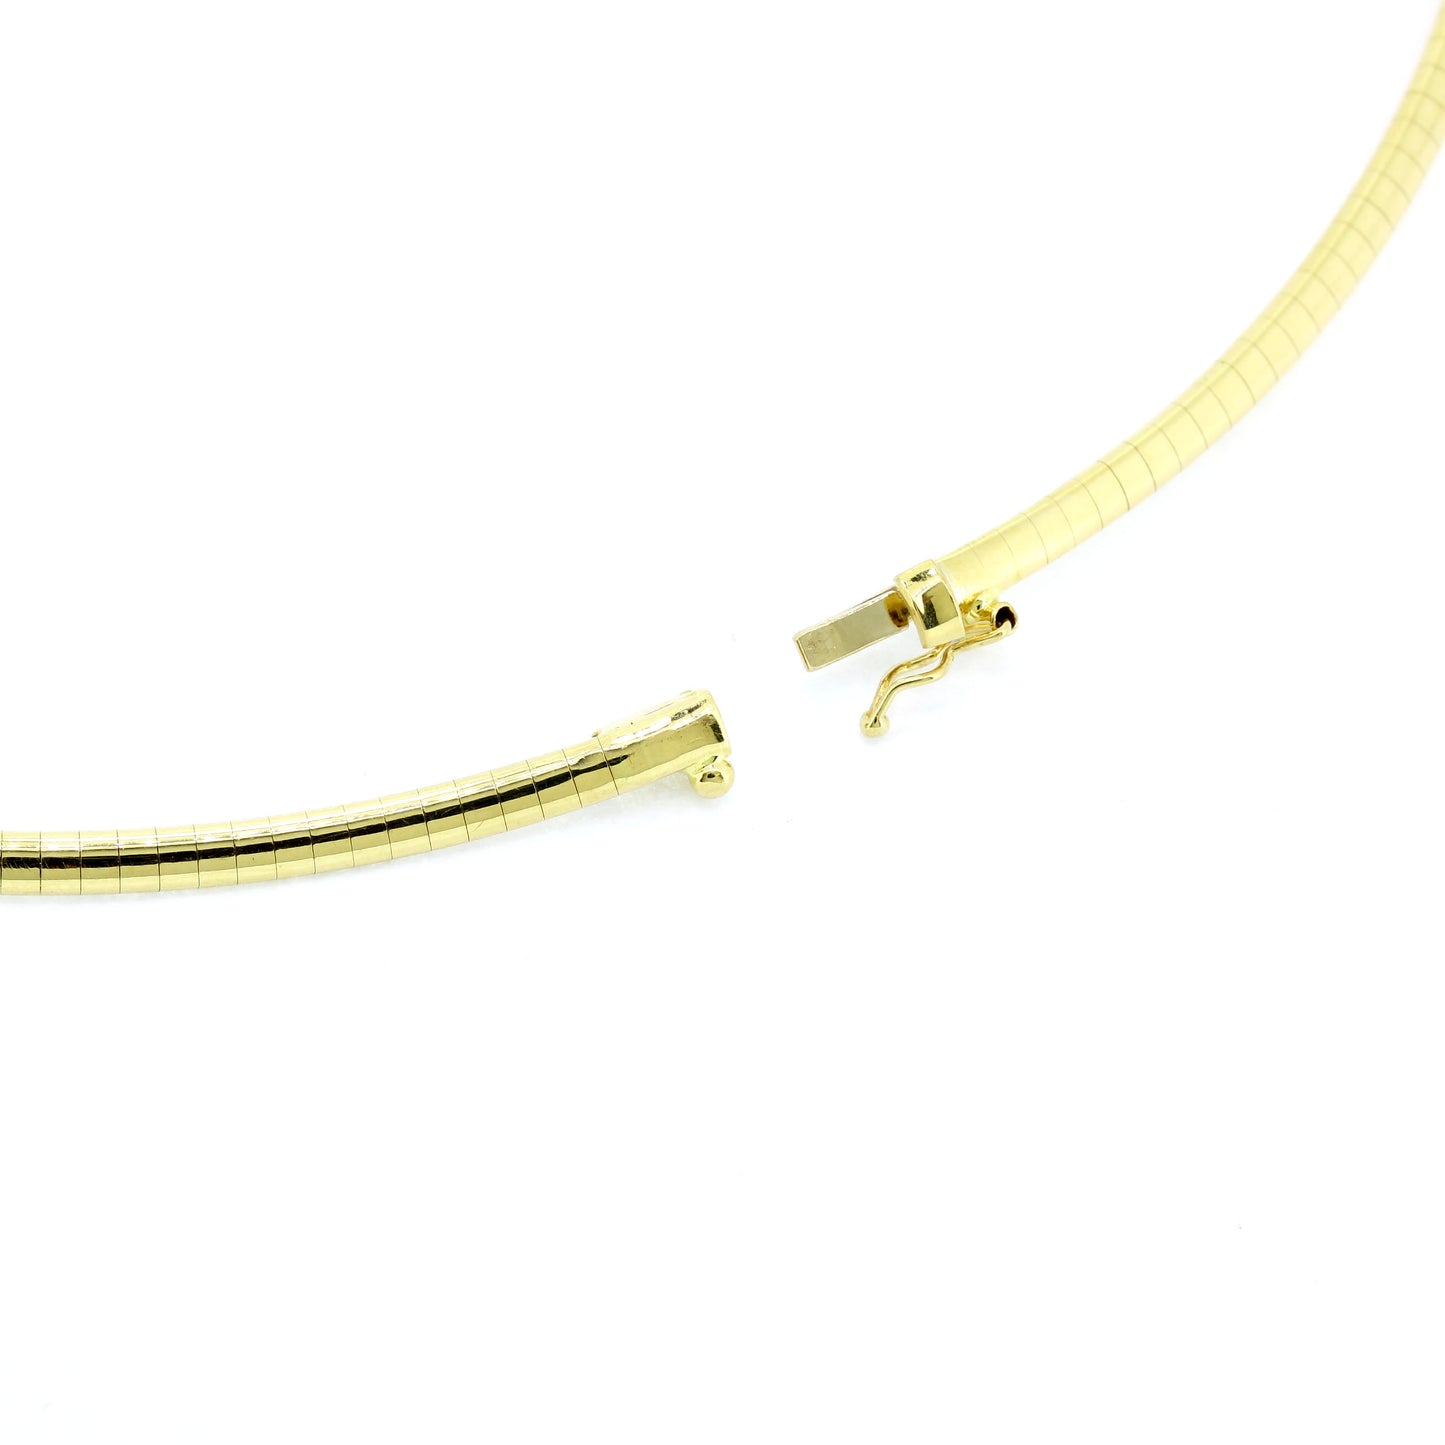 Omega Halskette 750 Gold Brillant Anhänger 18 Kt 0,30 ct G-SI Wert 4800,-